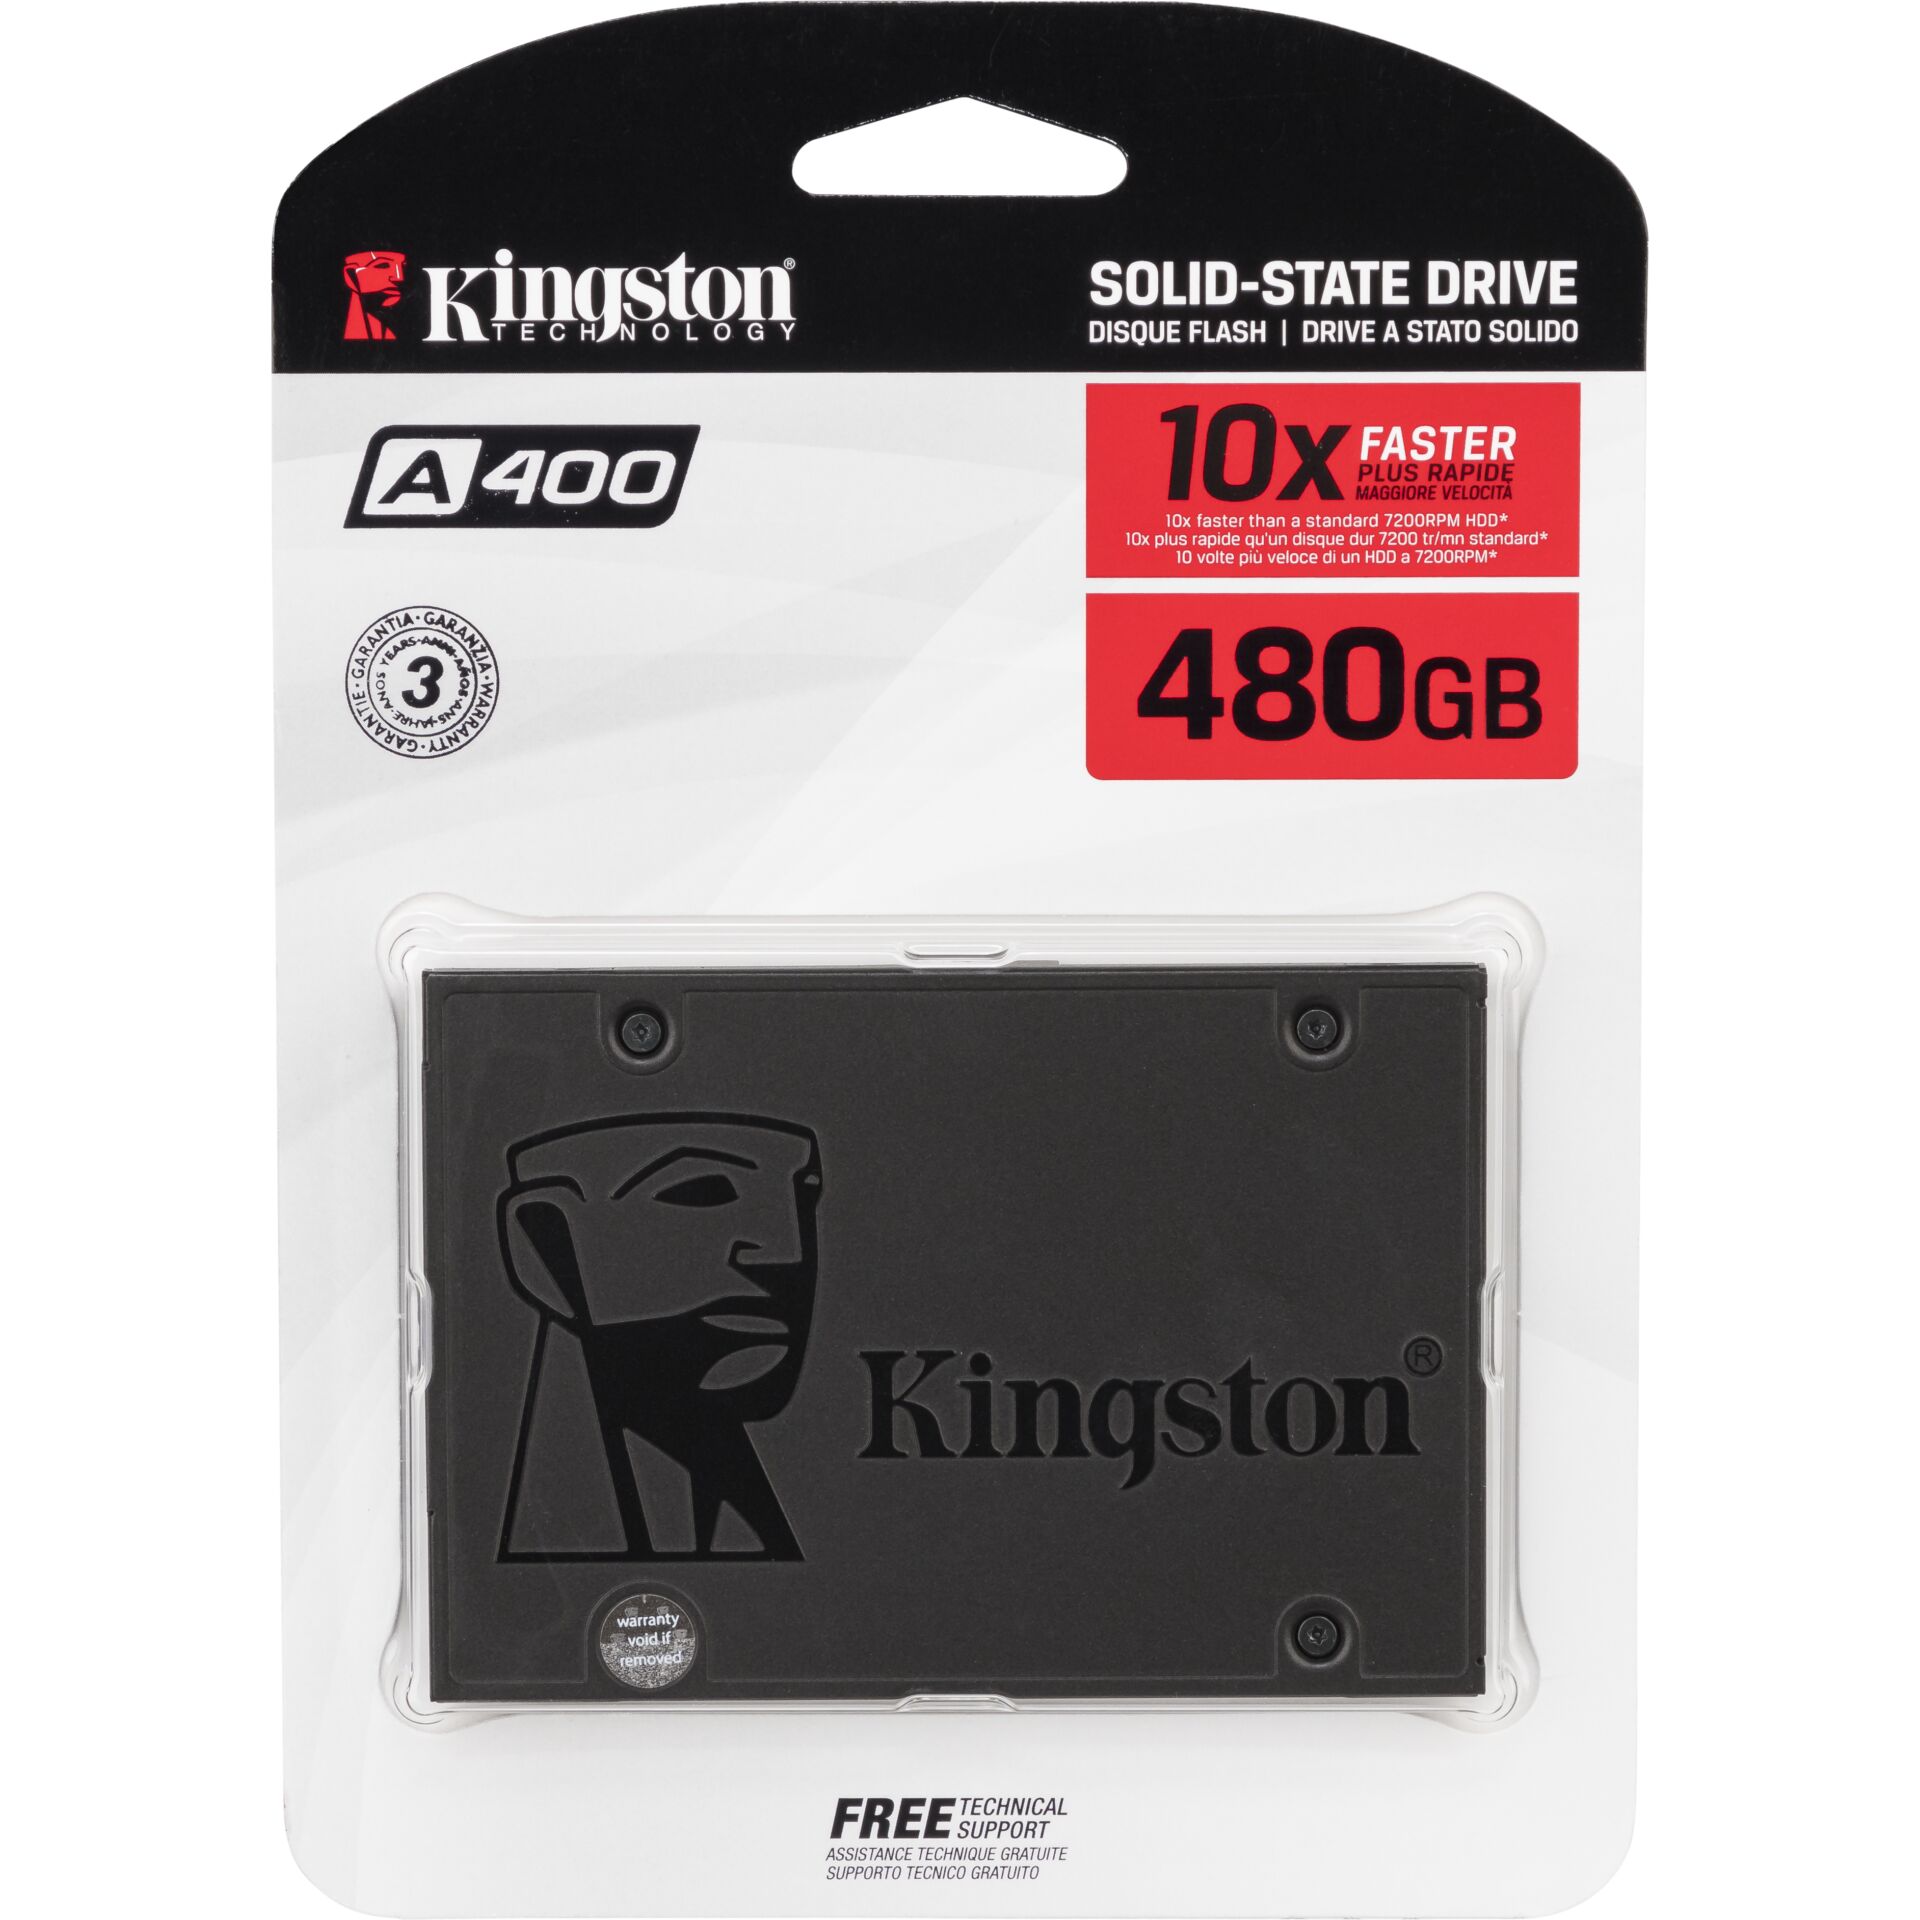 480 GB SSD Kingston A400, SATA 6,4cm / 2.5 Zoll SATA 6Gb/s lesen: 500MB/s, schreiben: 450MB/s, TBW: 160TB